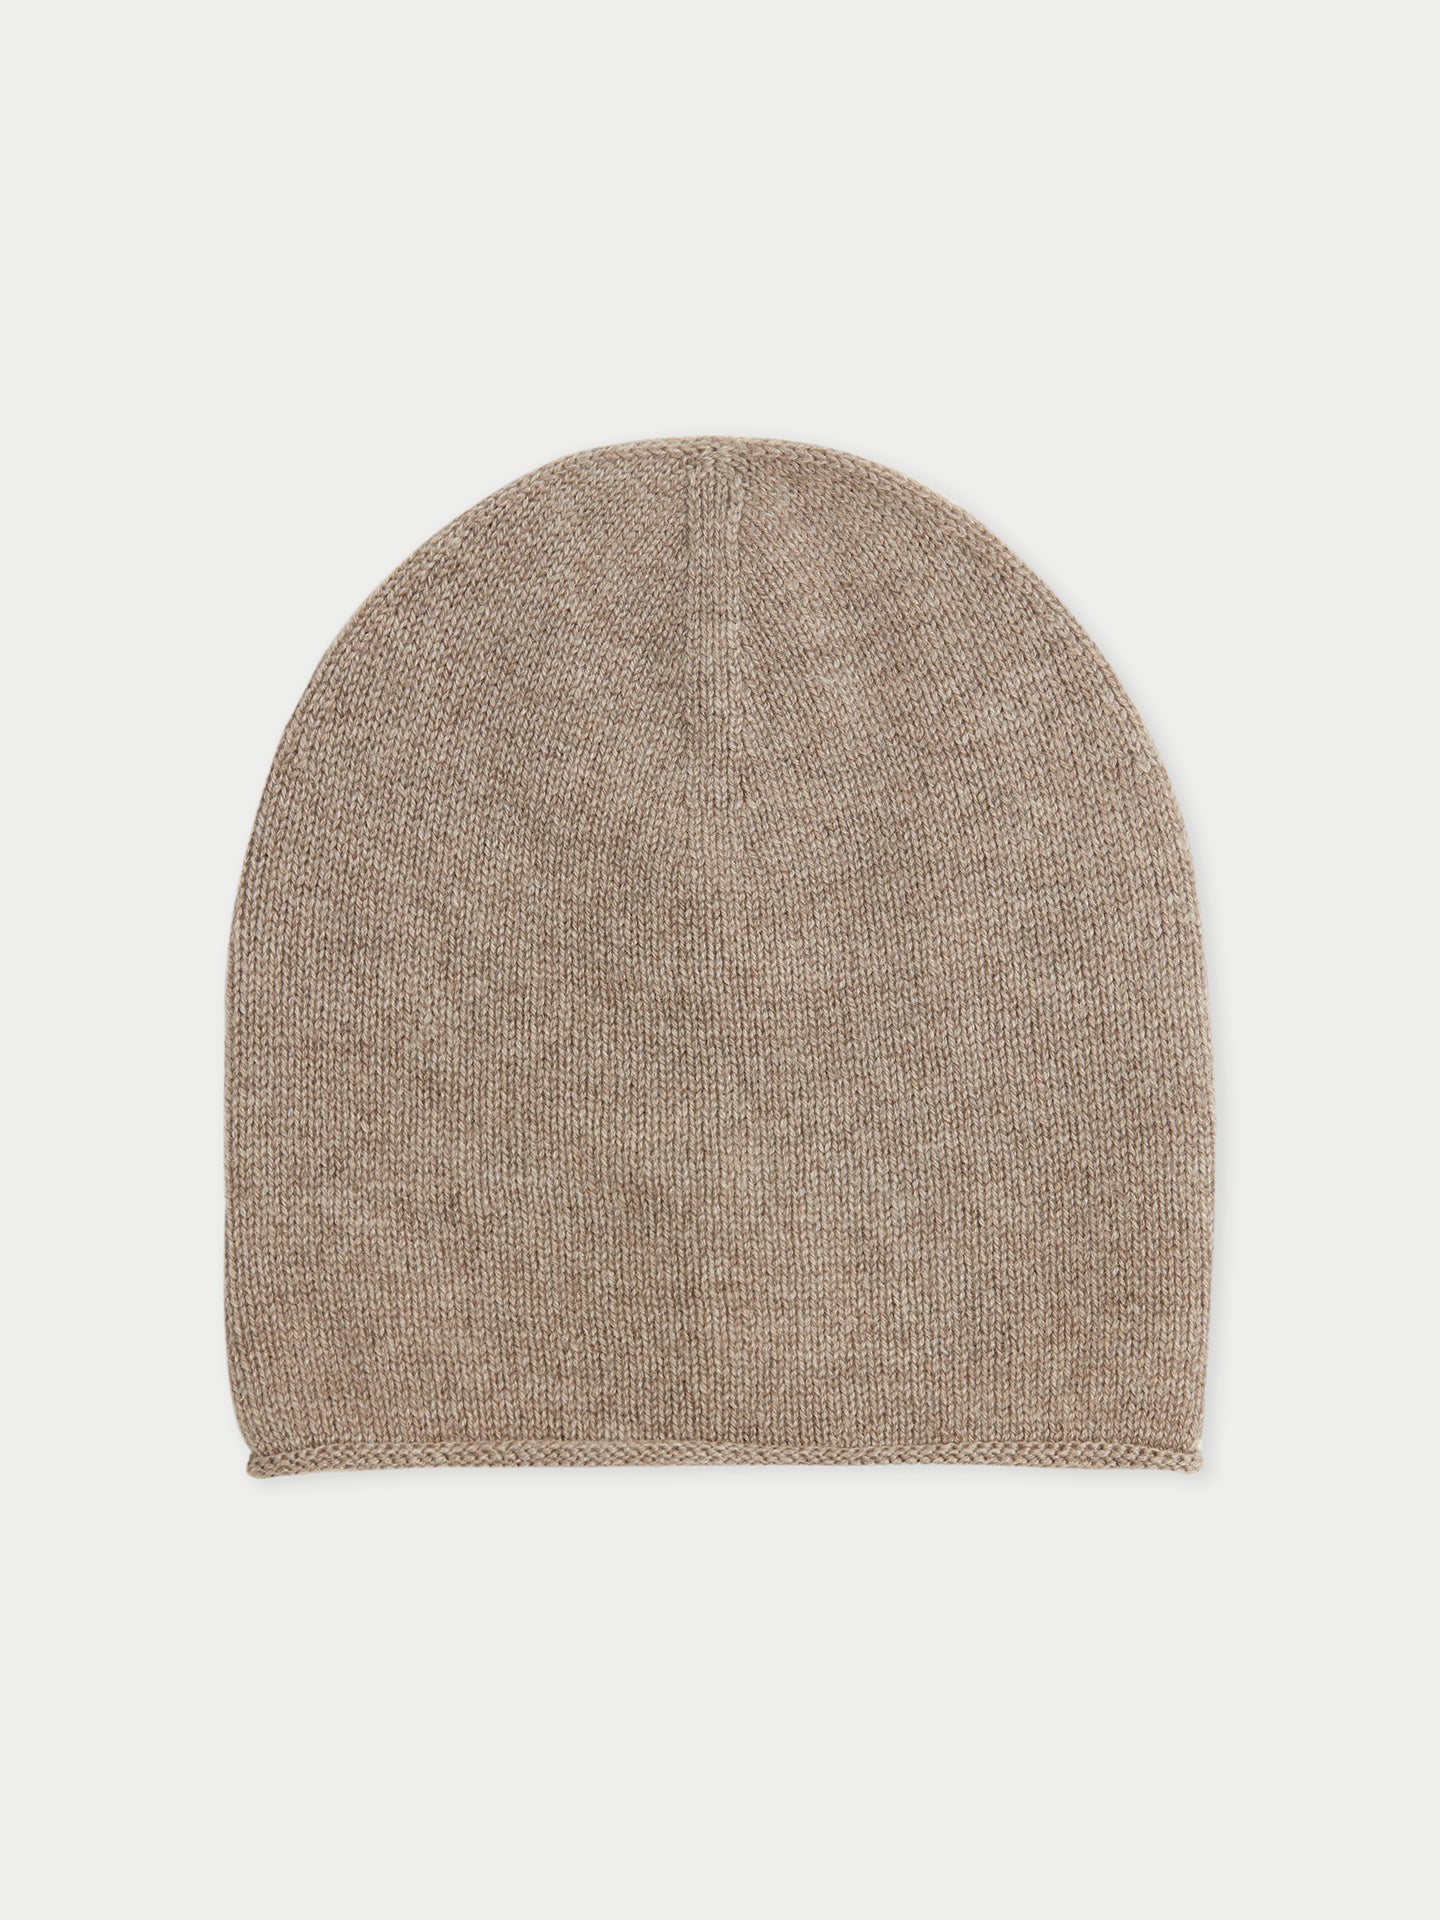 Women's Cashmere $99 Hat & Sweater Set Taupe - Gobi Cashmere